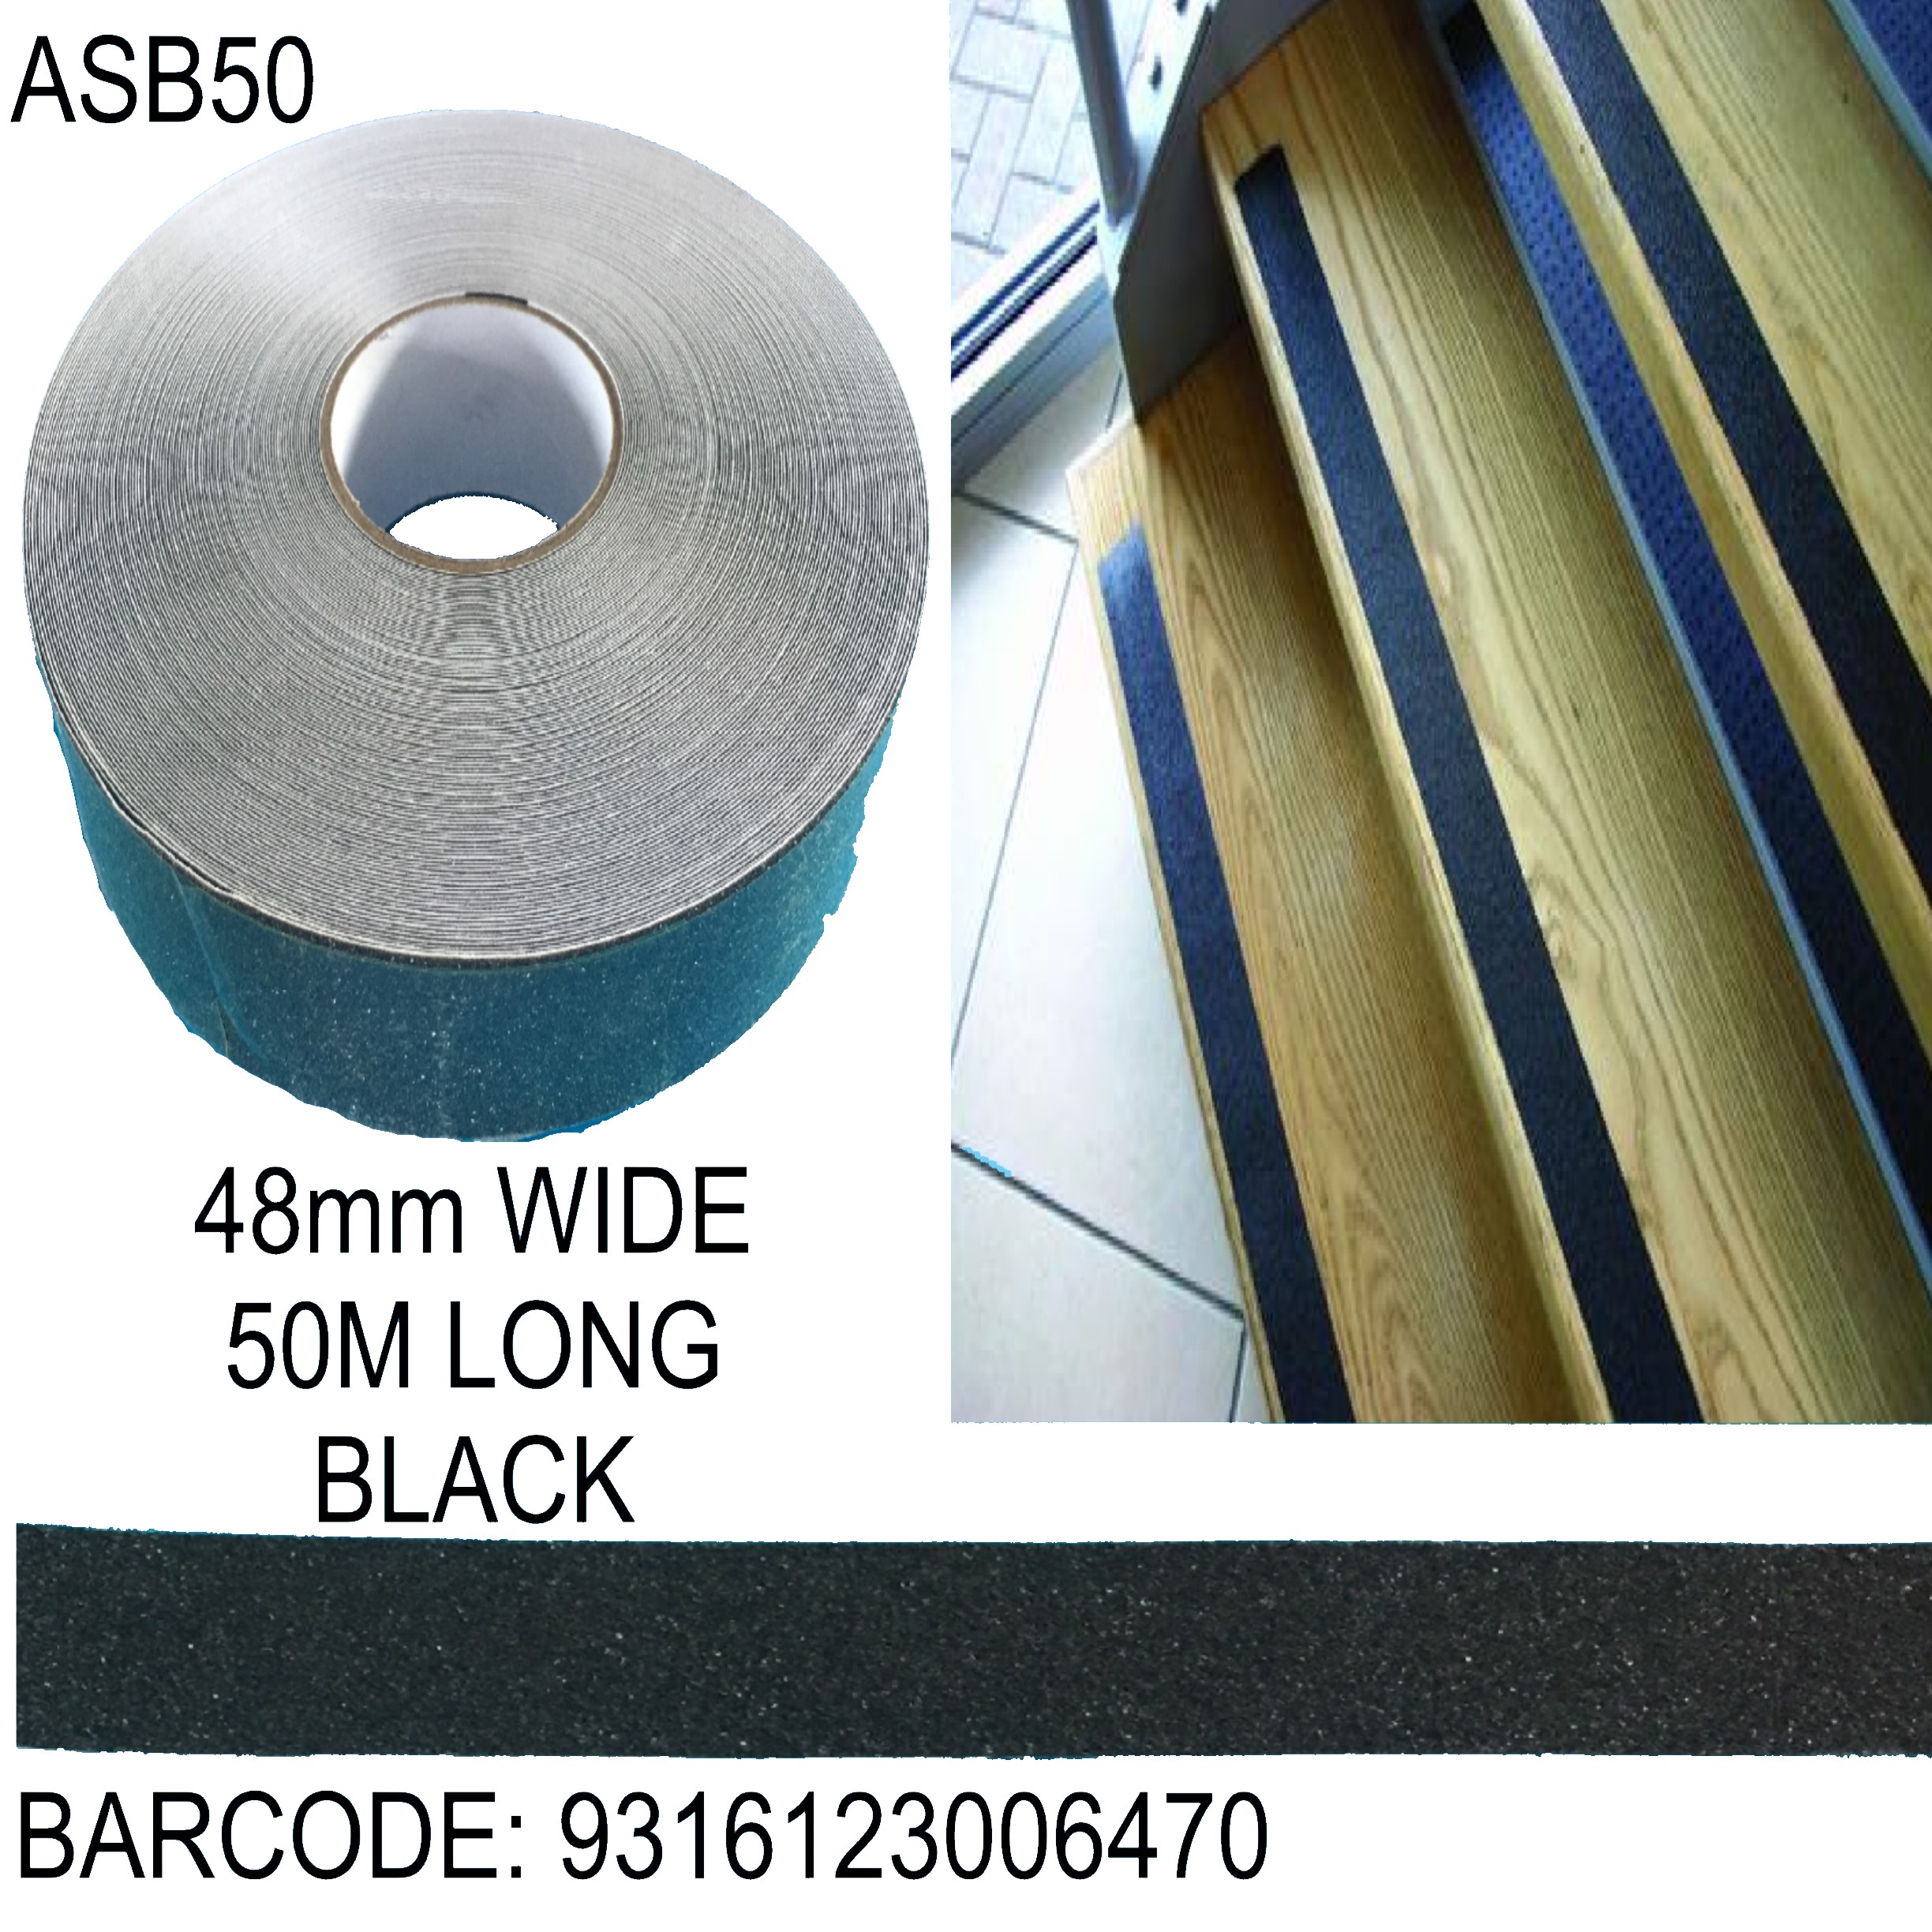 ASB50 – Black Anti-Slip Tape 50M - Handy Hardware